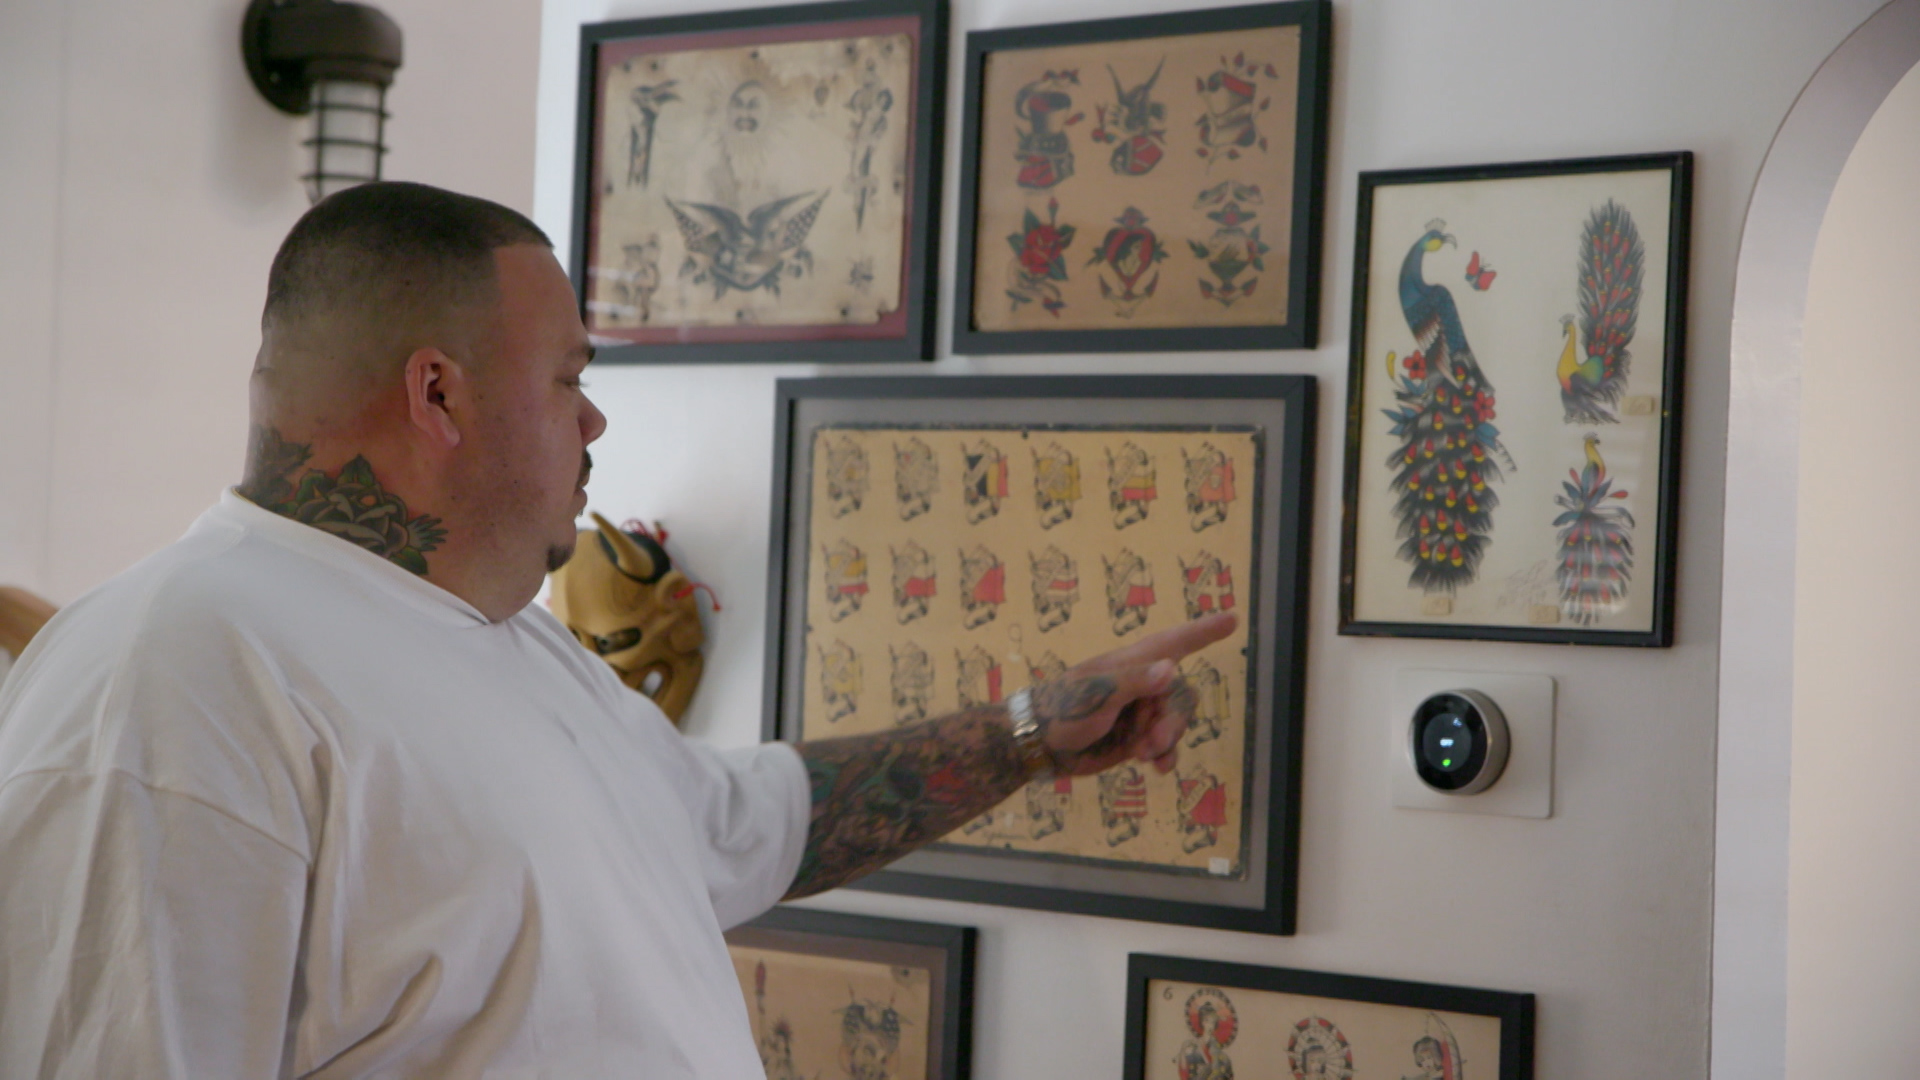 Bert Krak's New York Style Tattoo Collections - VICE Video: Documentaries, Films, News Videos